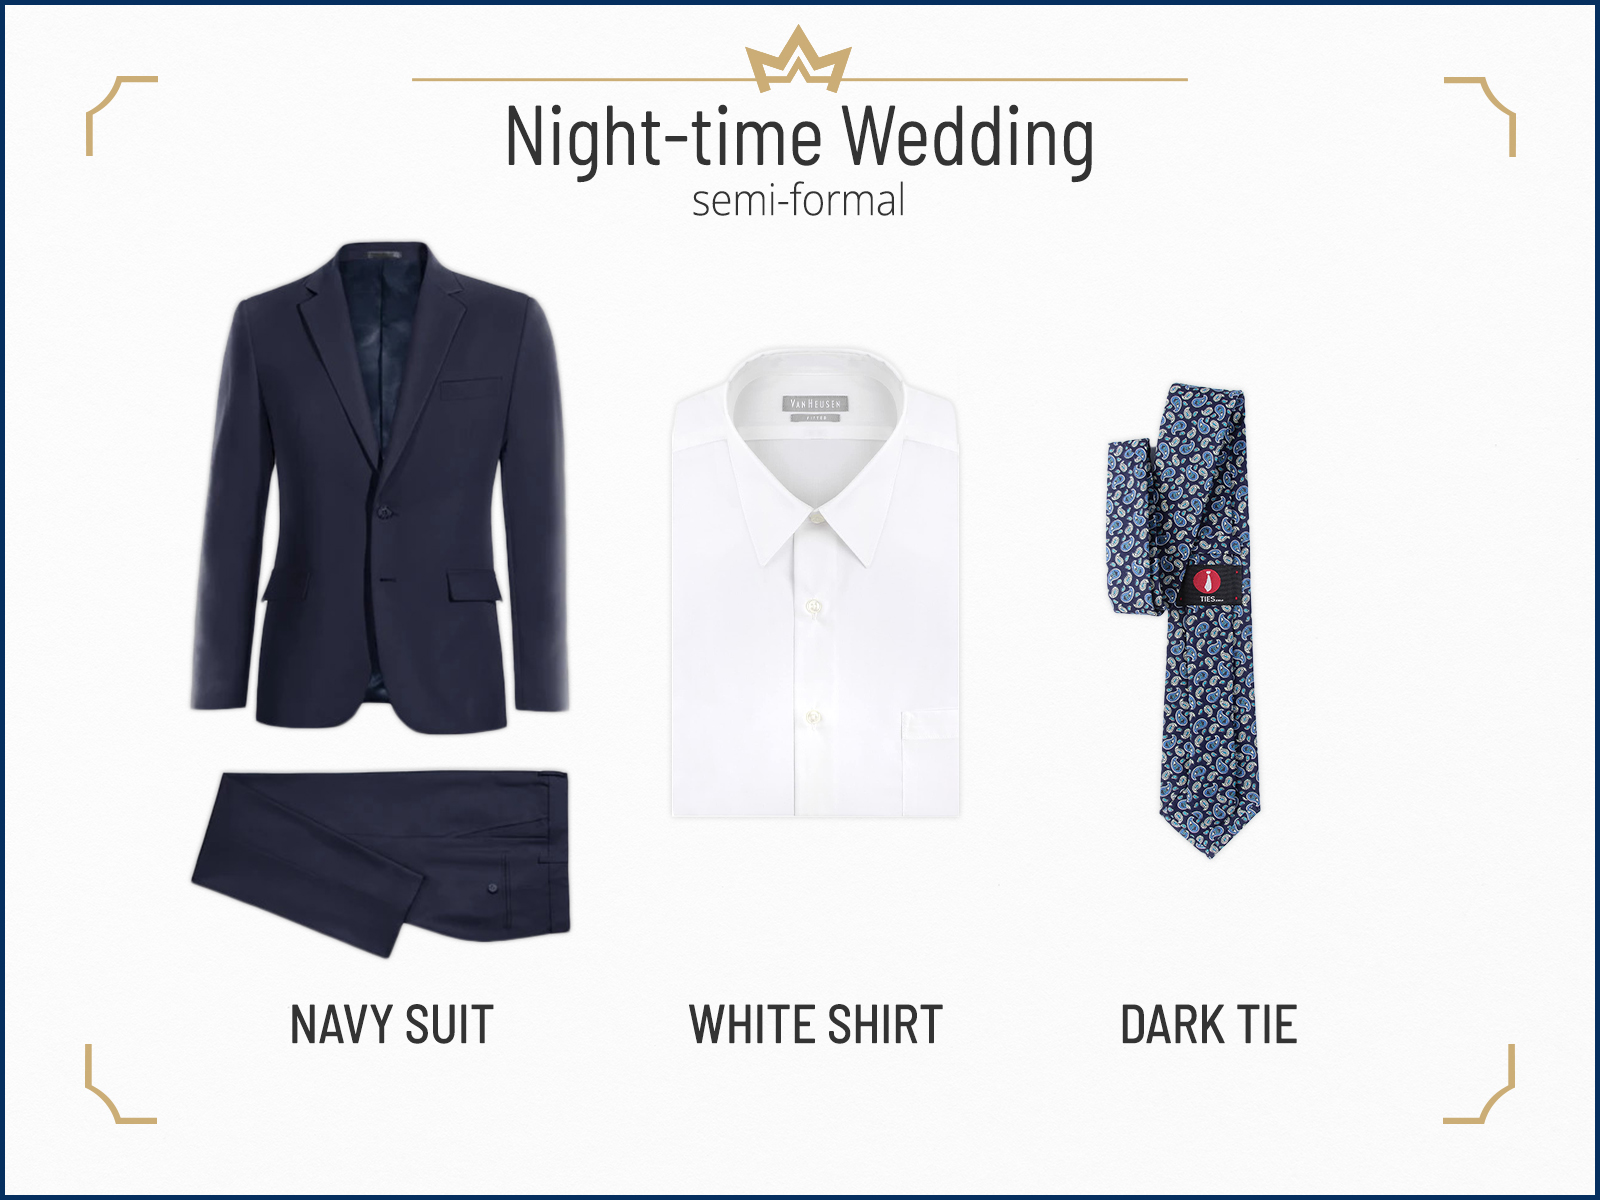 Semi-formal nighttime wedding outfit